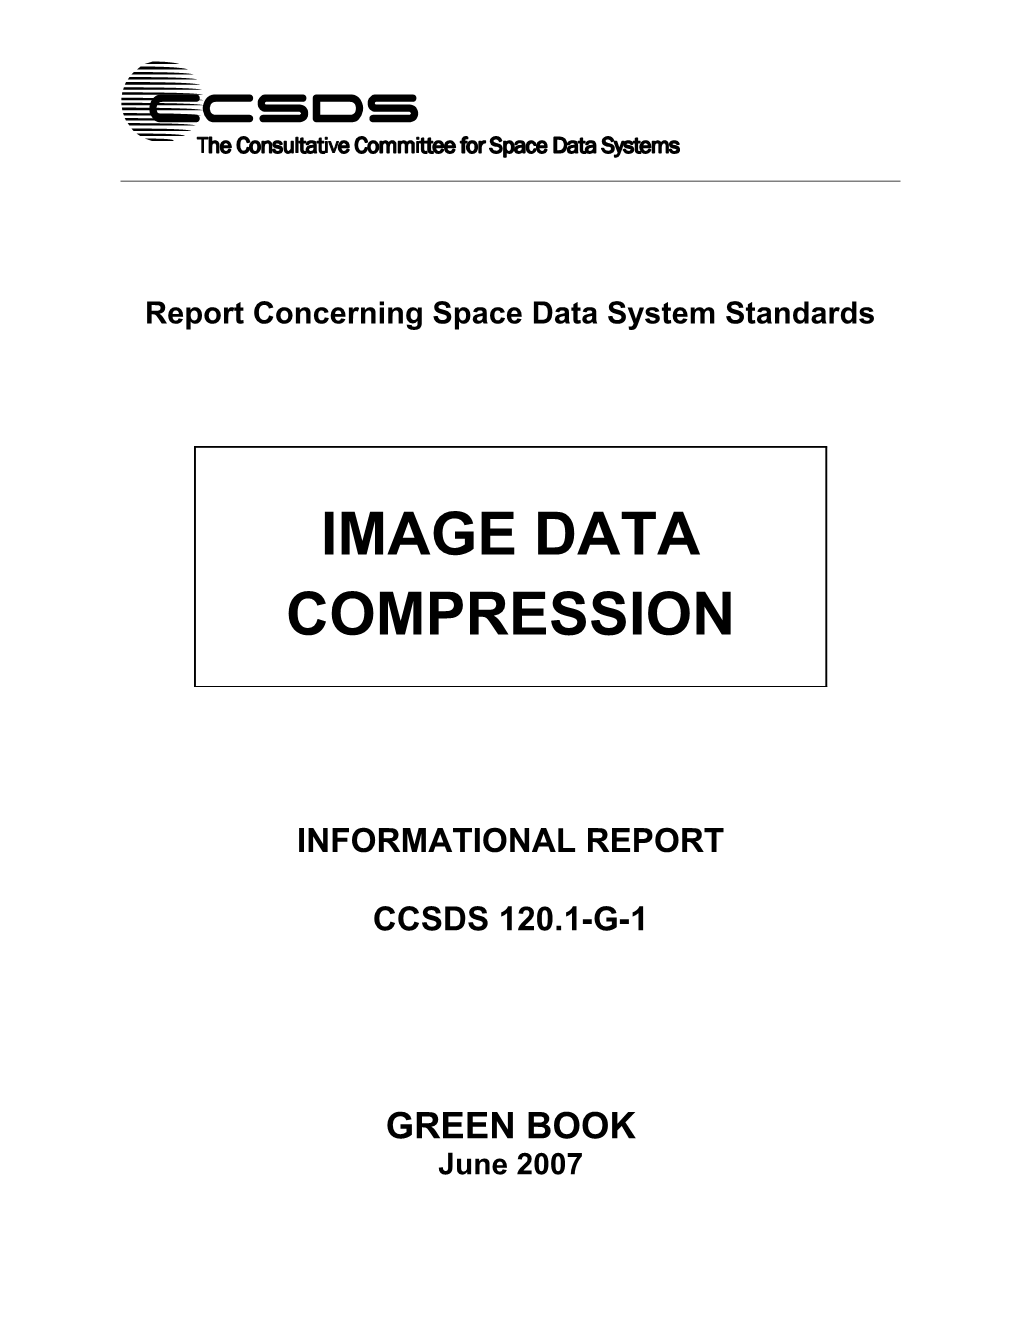 Image Data Compression